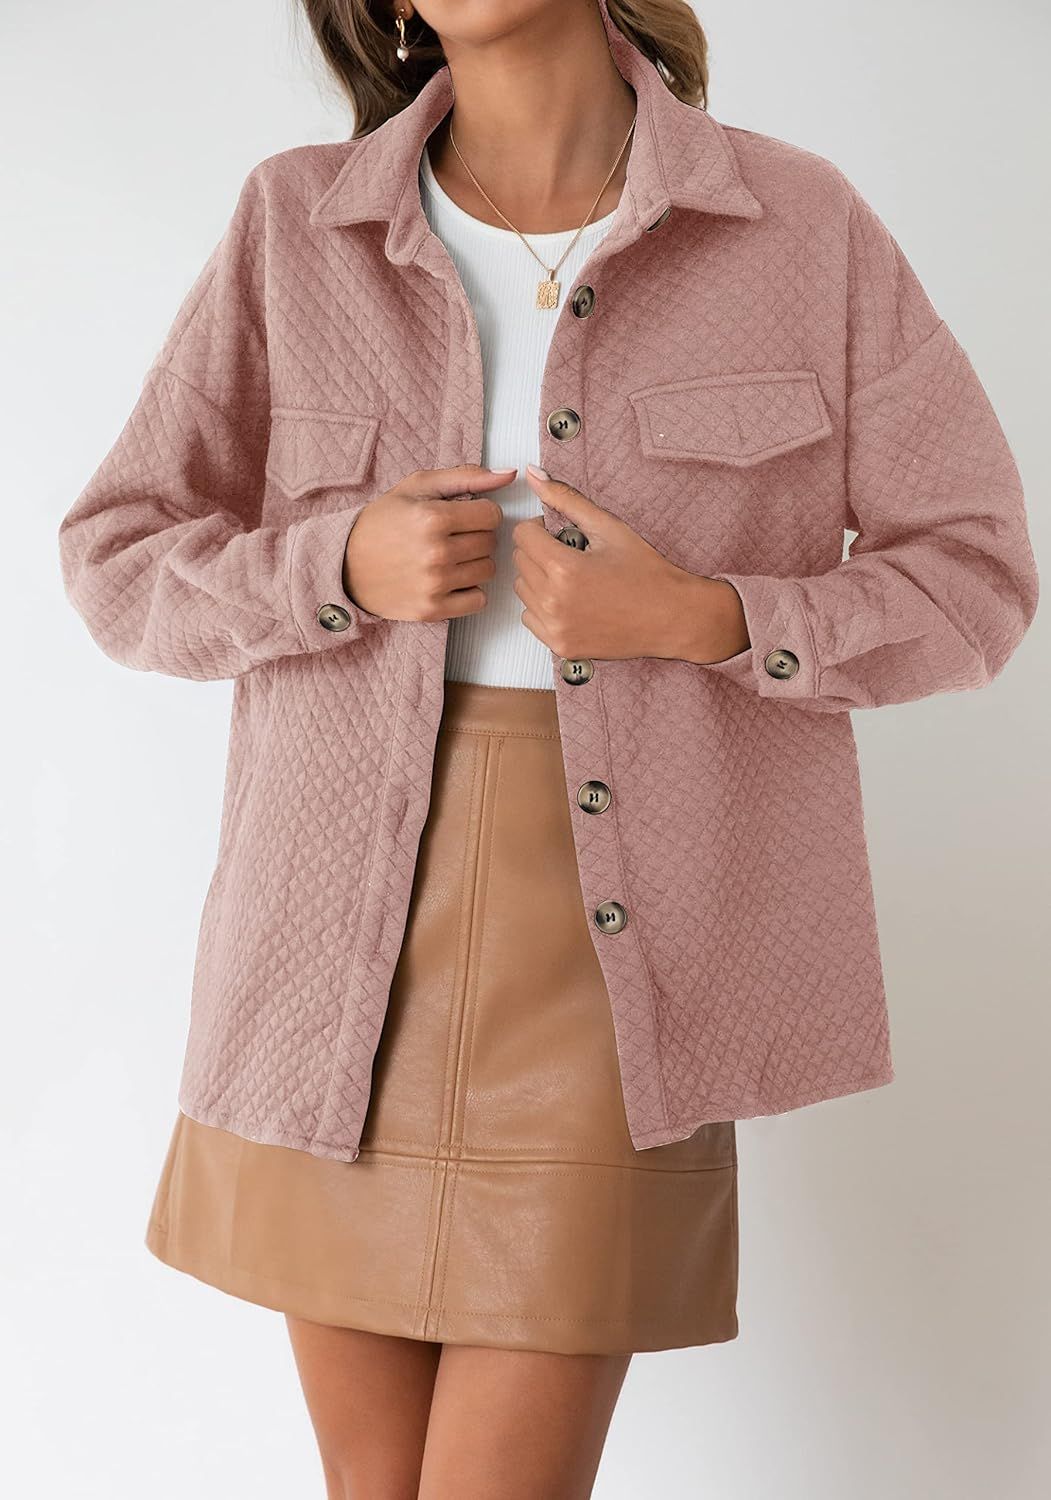 MUXERI Women's Long Sleeve Button Down Diamond Soft Lightweight Shacket Shirt Jacket Coat Outwear wi | Amazon (US)